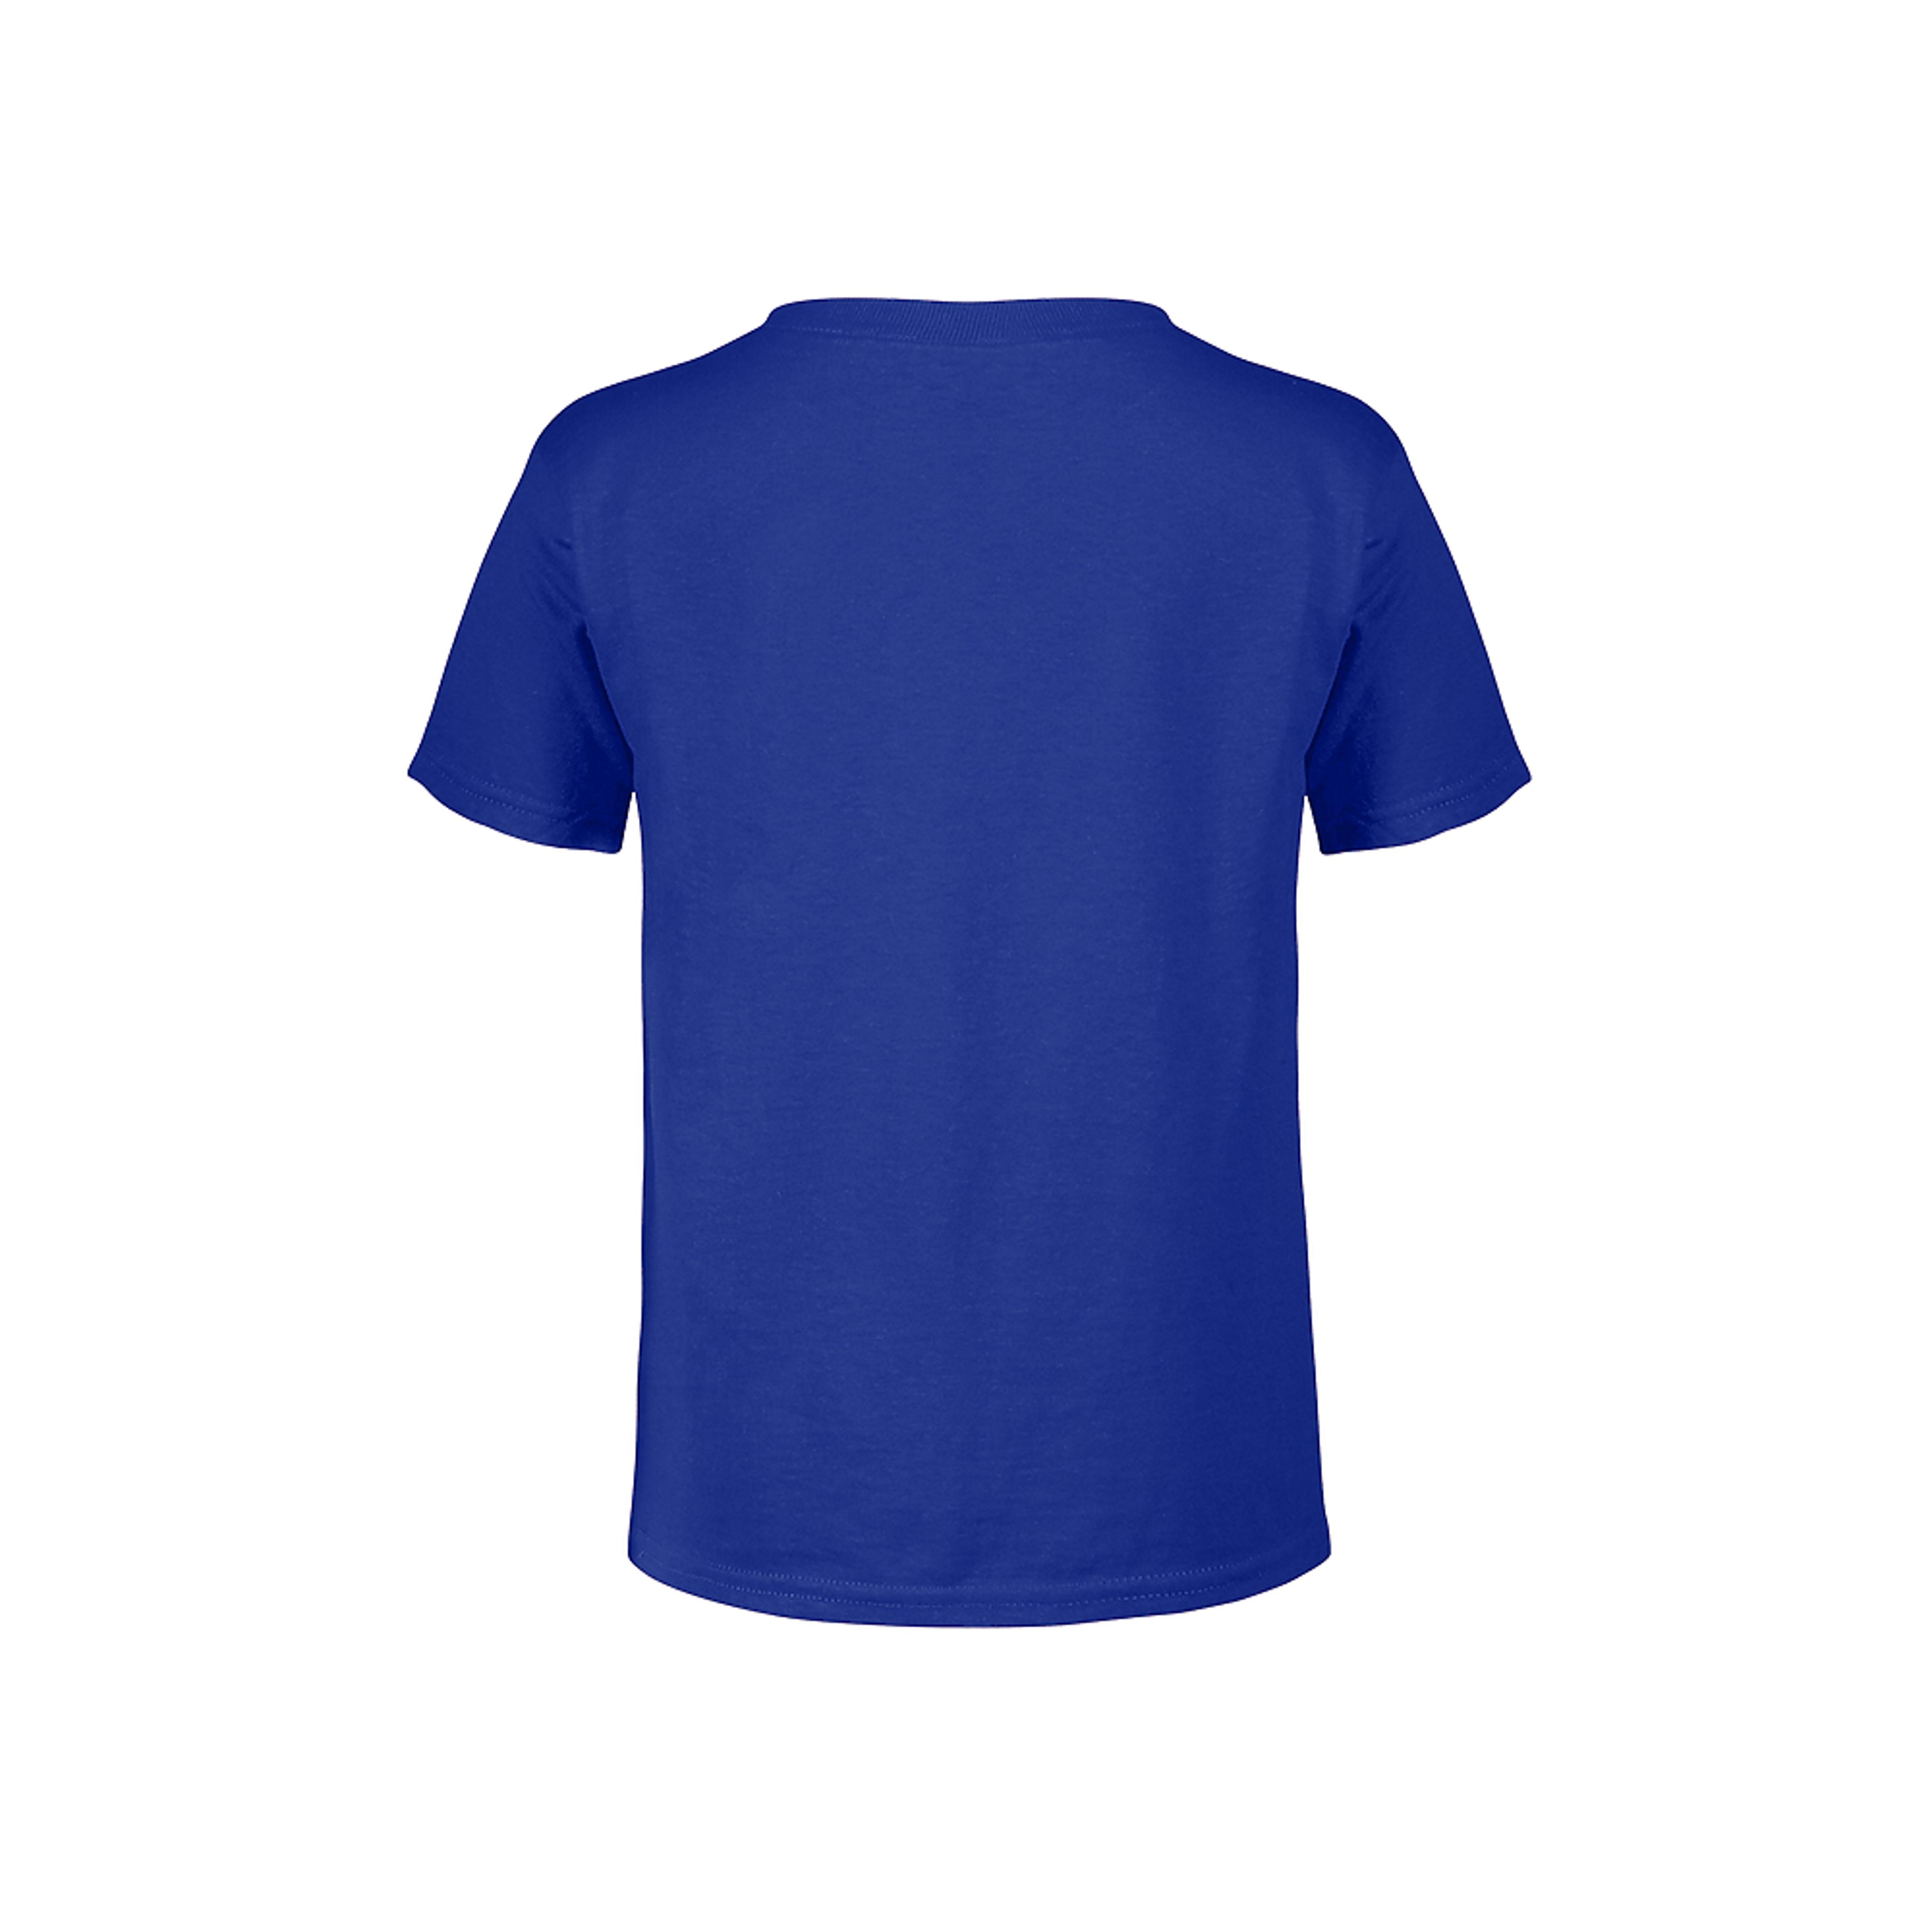 Alternate View 2 of Boy's Tonka Trencher Blueprint T-Shirt